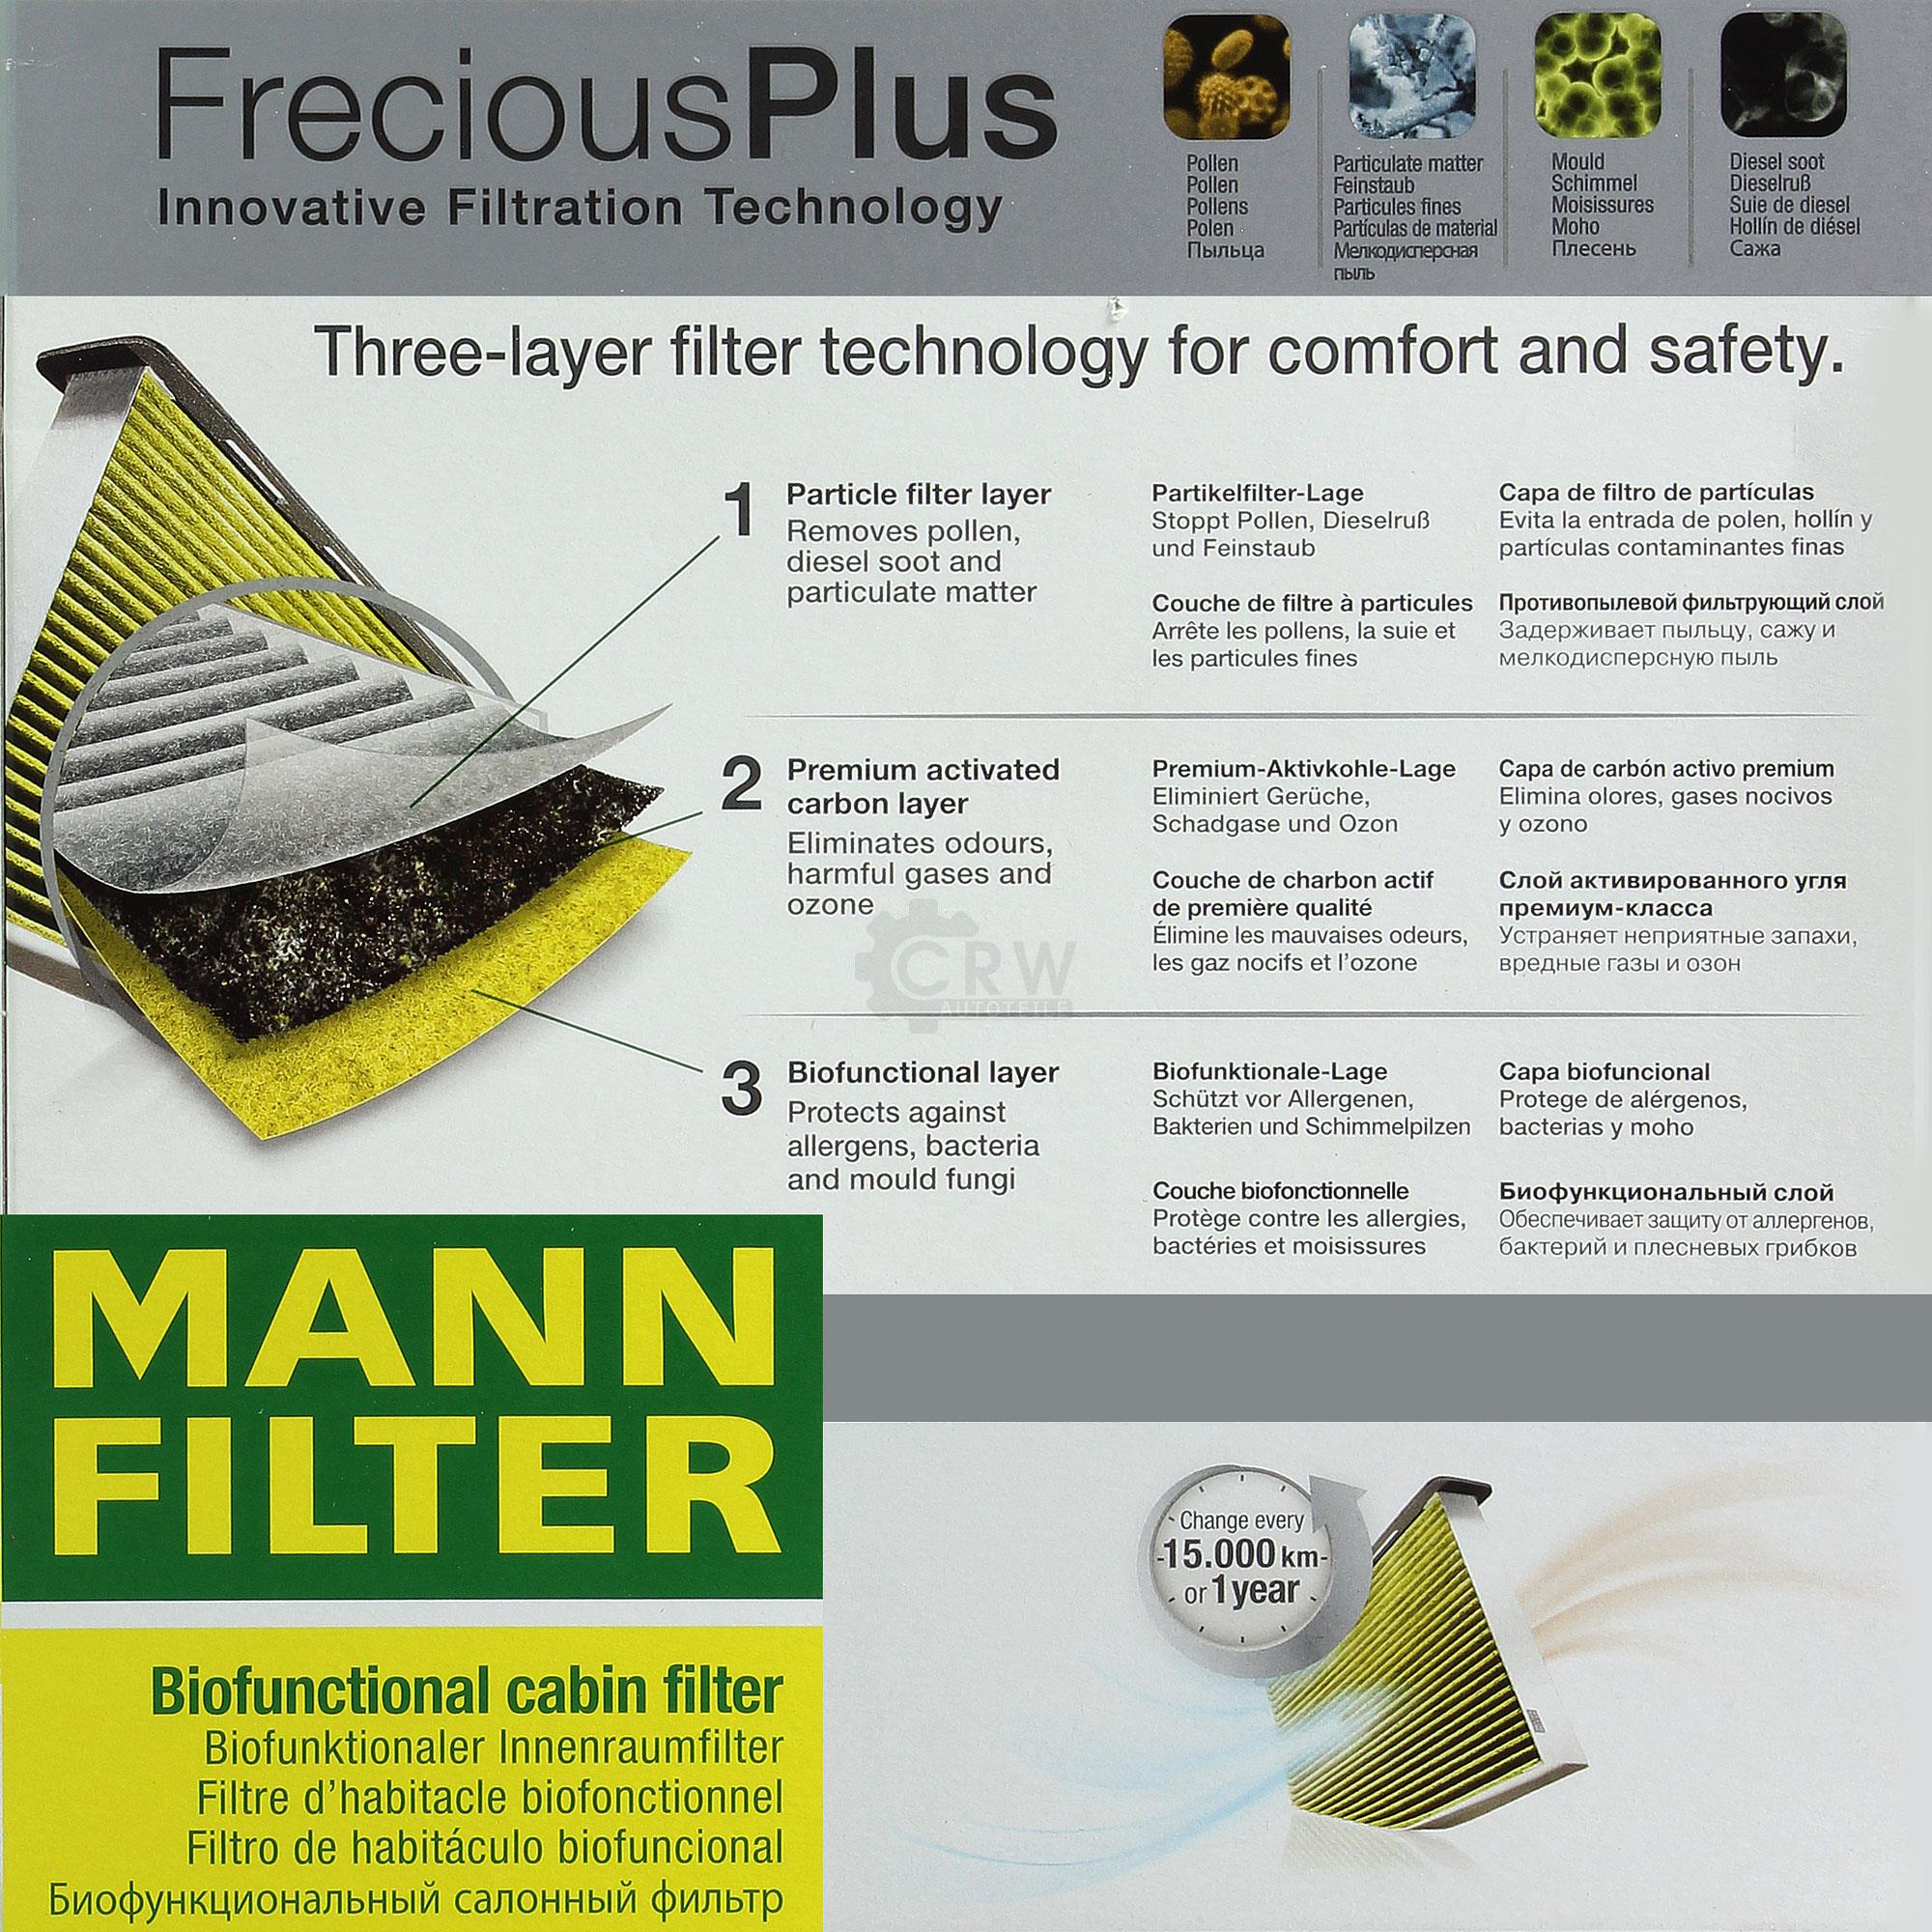 MANN-Filter Innenraumfilter Biofunctional für Allergiker FP 6724